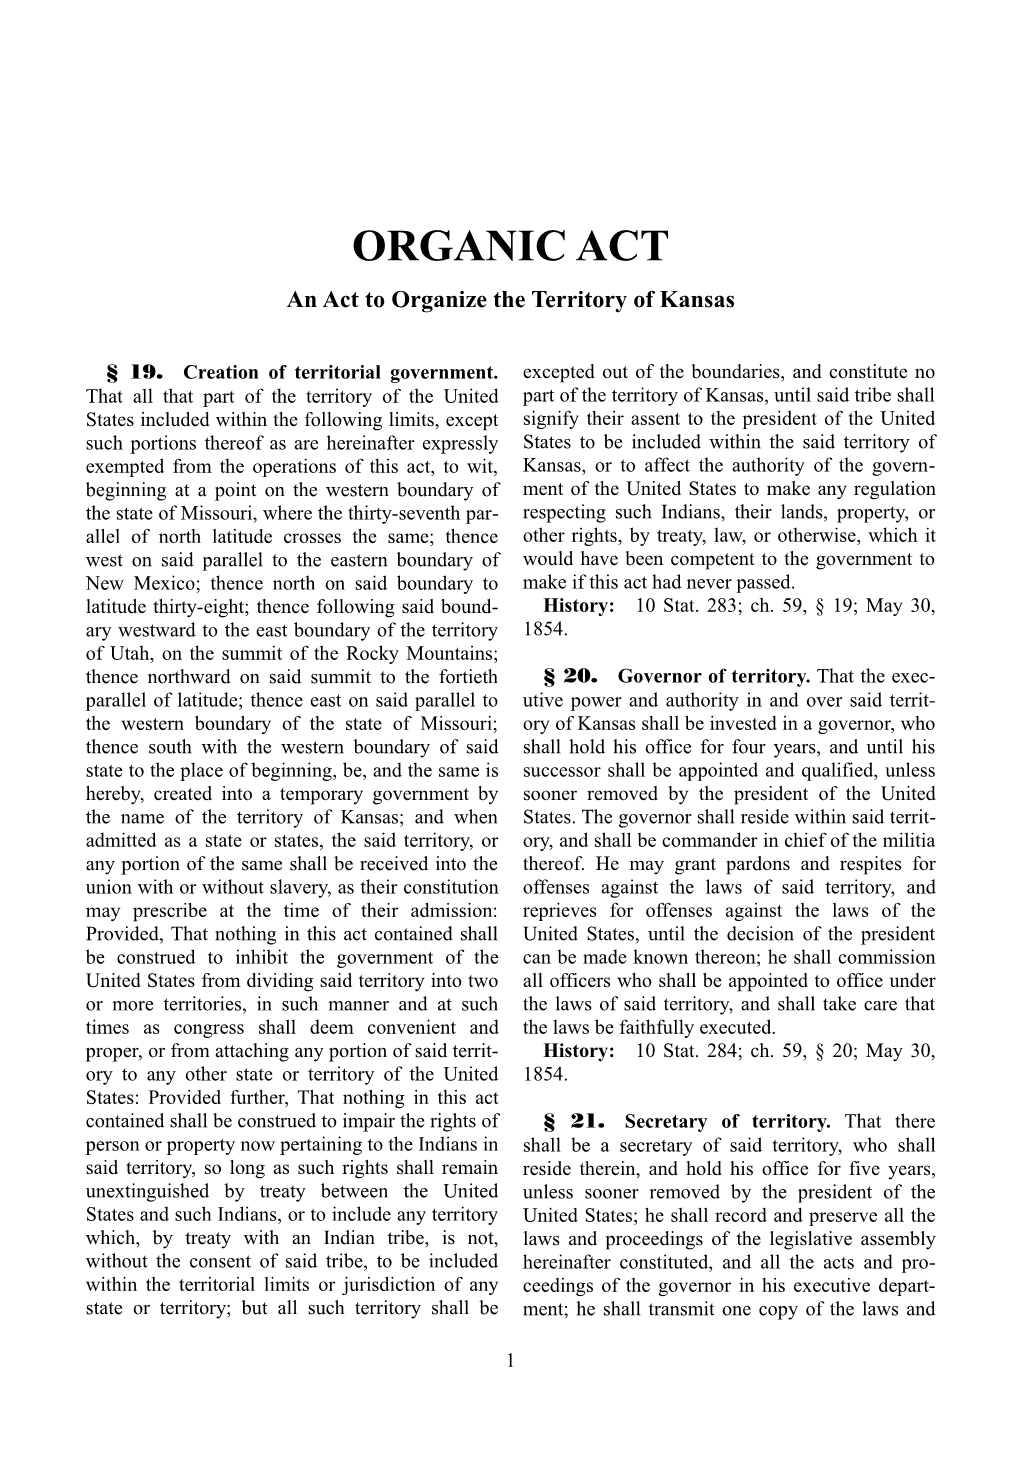 Organic Act: an Act to Organize the Territory of Kansas